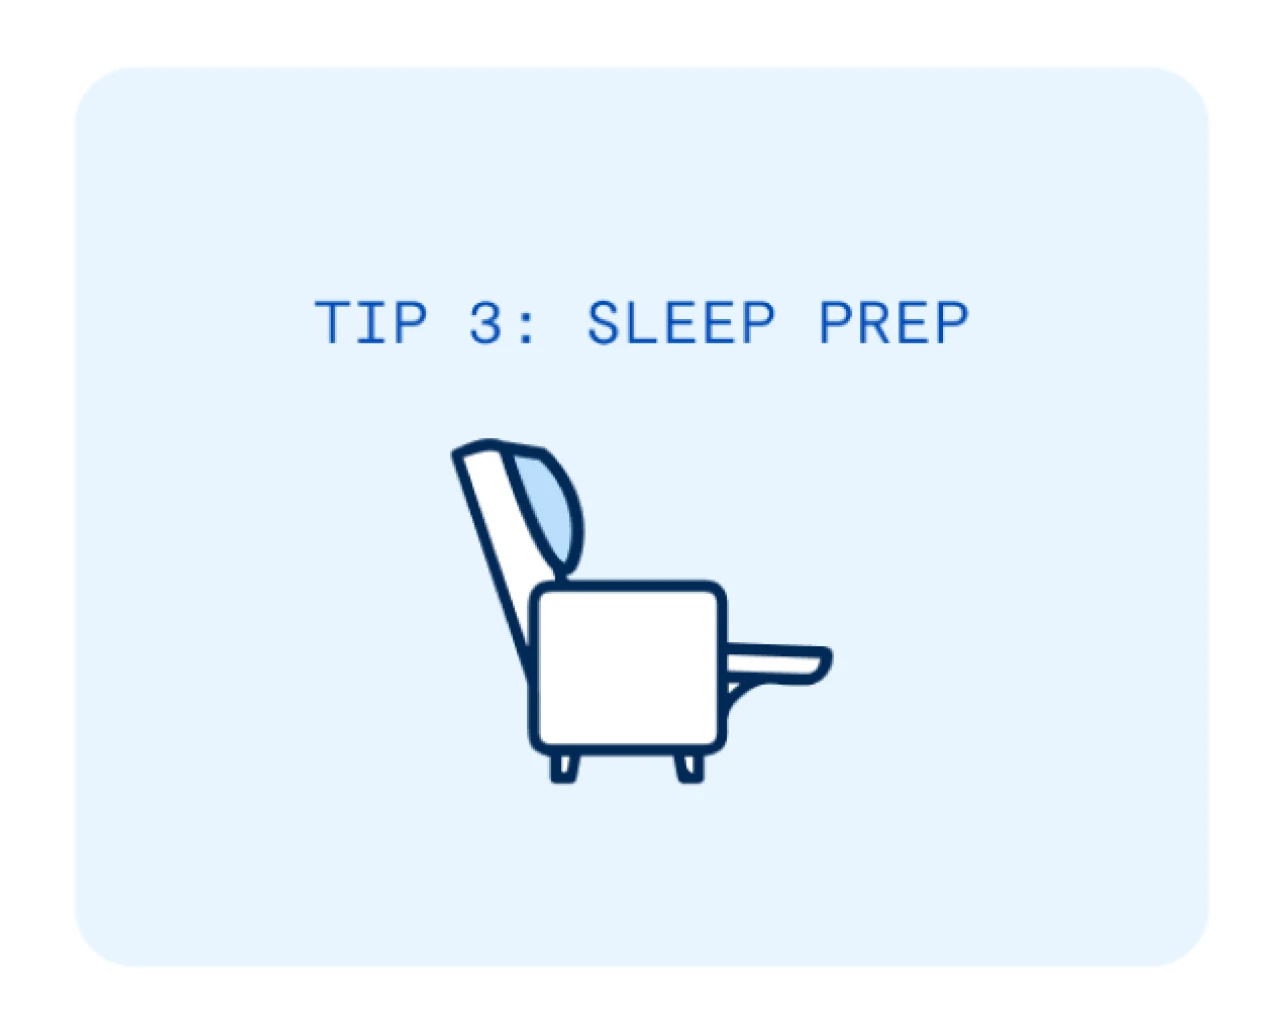 Tip 3: Sleep prep.